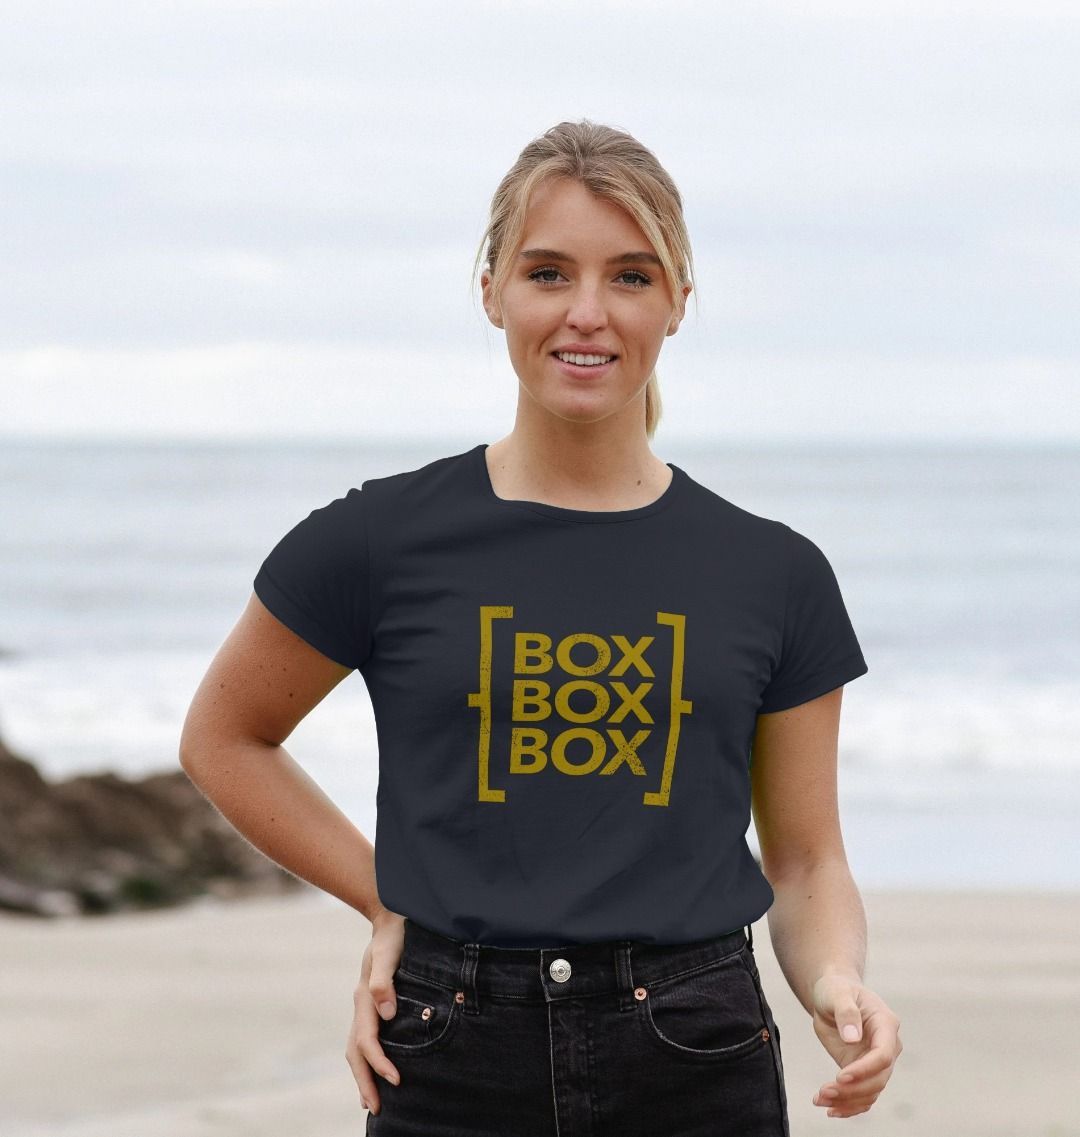 Box Box Box - the T-shirt (womens fit)